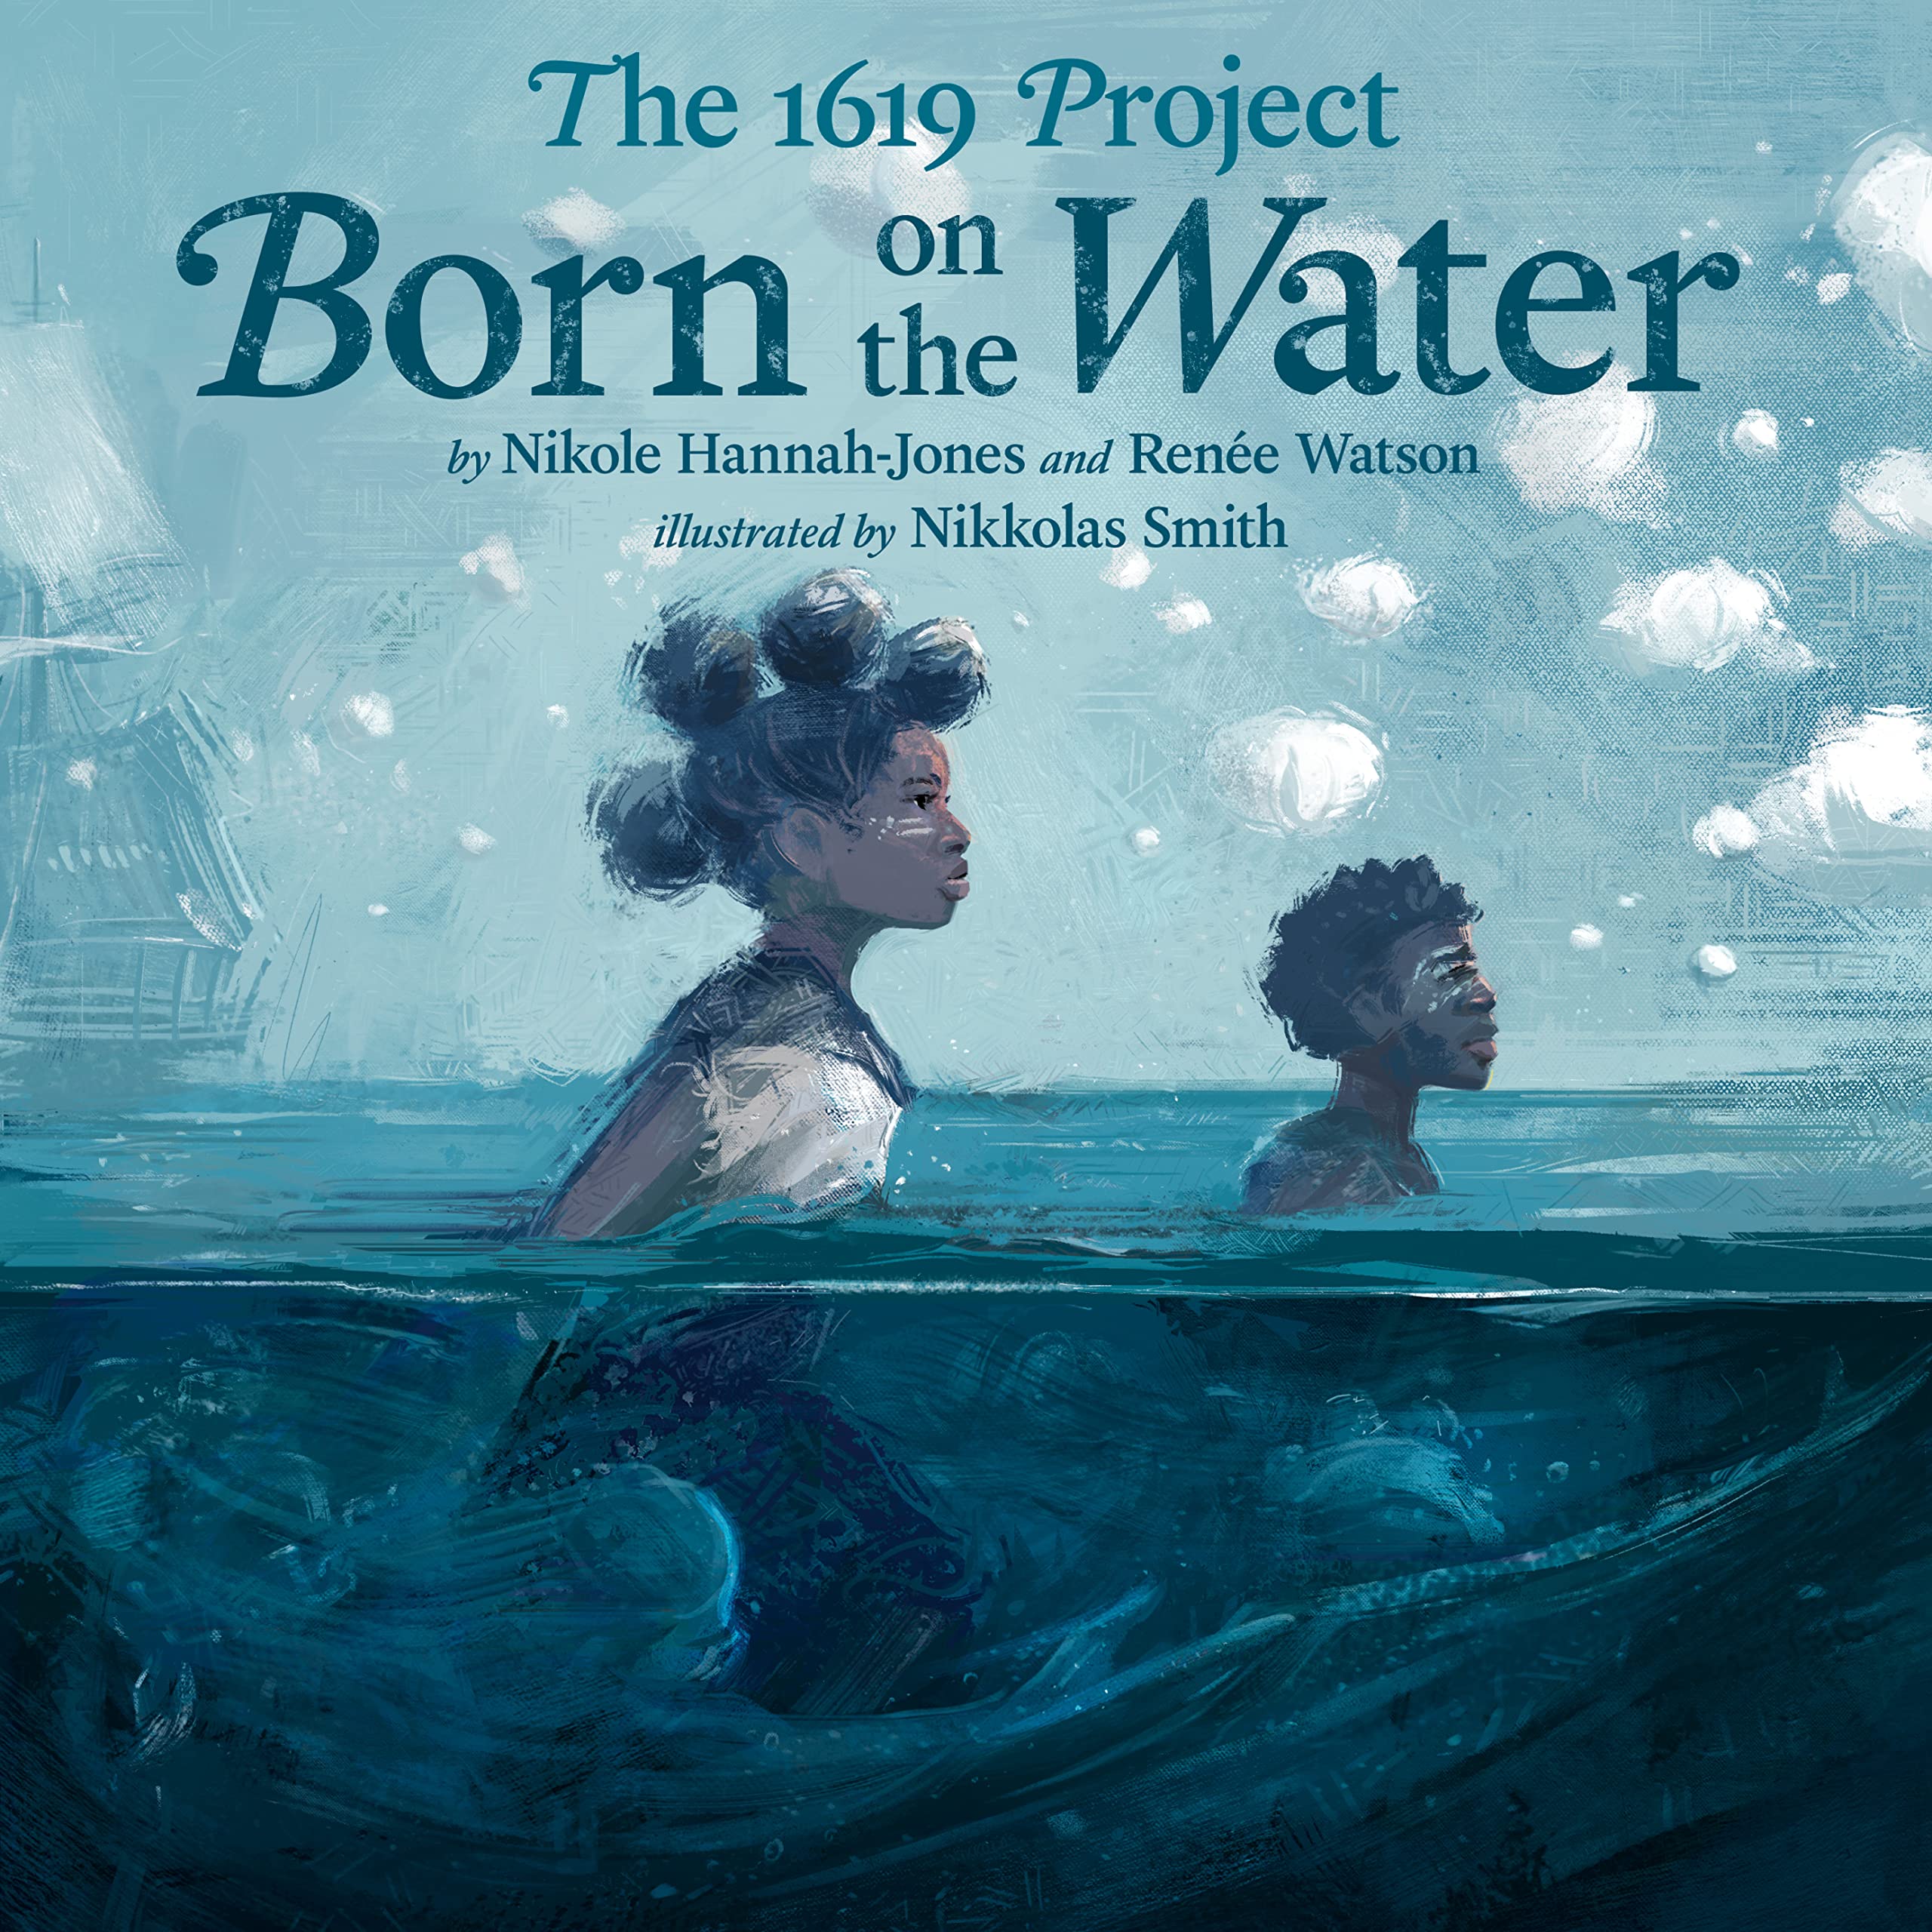 The 1619 Project: Born on the Water Hardcover by Nikole Hannah-Jones  (Author), Renée Watson (Author), Nikkolas Smith (Illustrator)